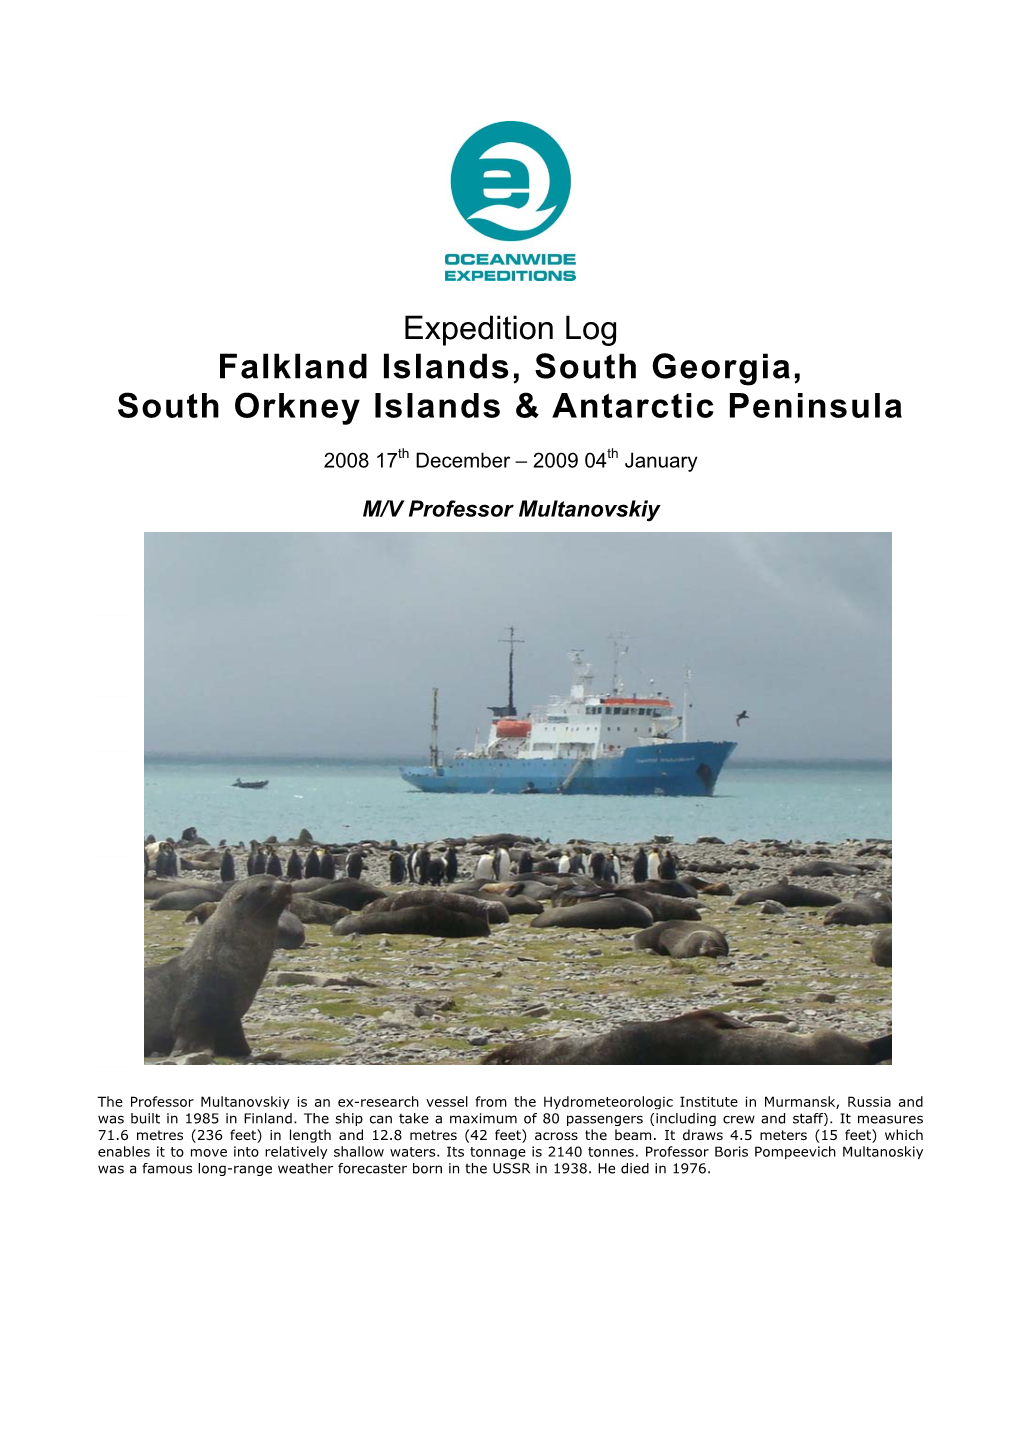 Falkland Islands, South Georgia, South Orkney Islands & Antarctic